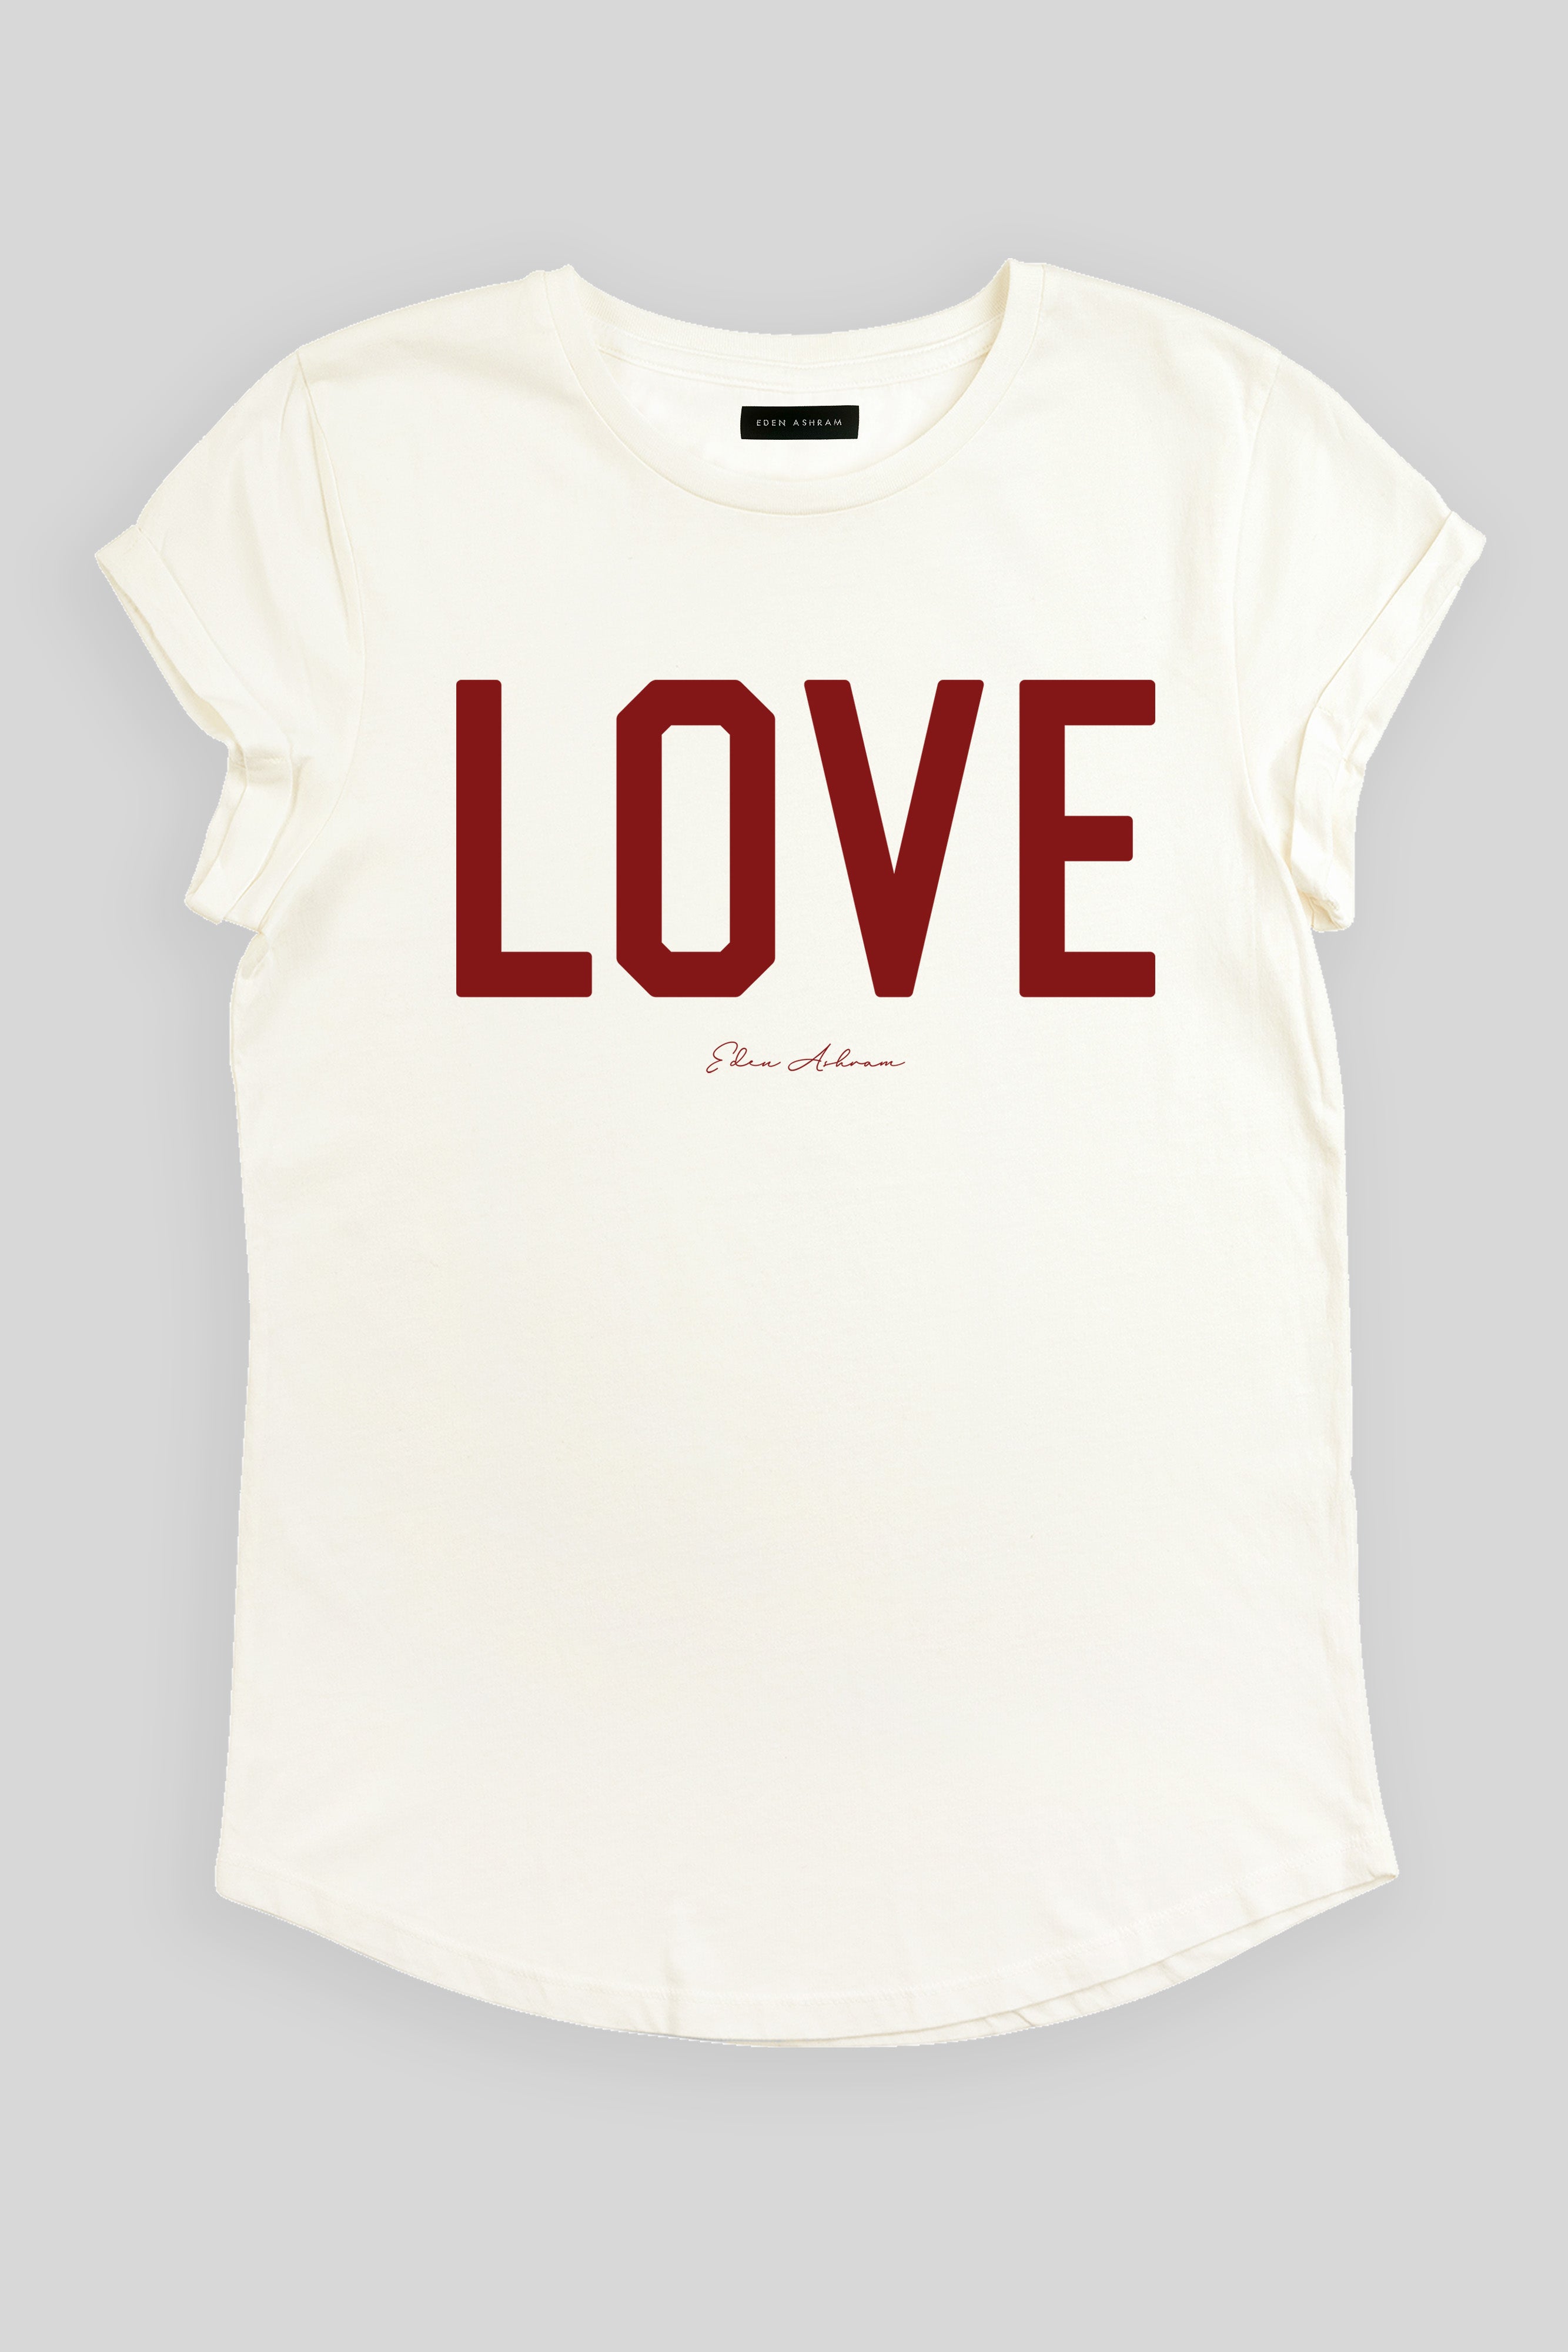 EDEN ASHRAM LOVE Premium Rolled Sleeve T-Shirt Stonewash White